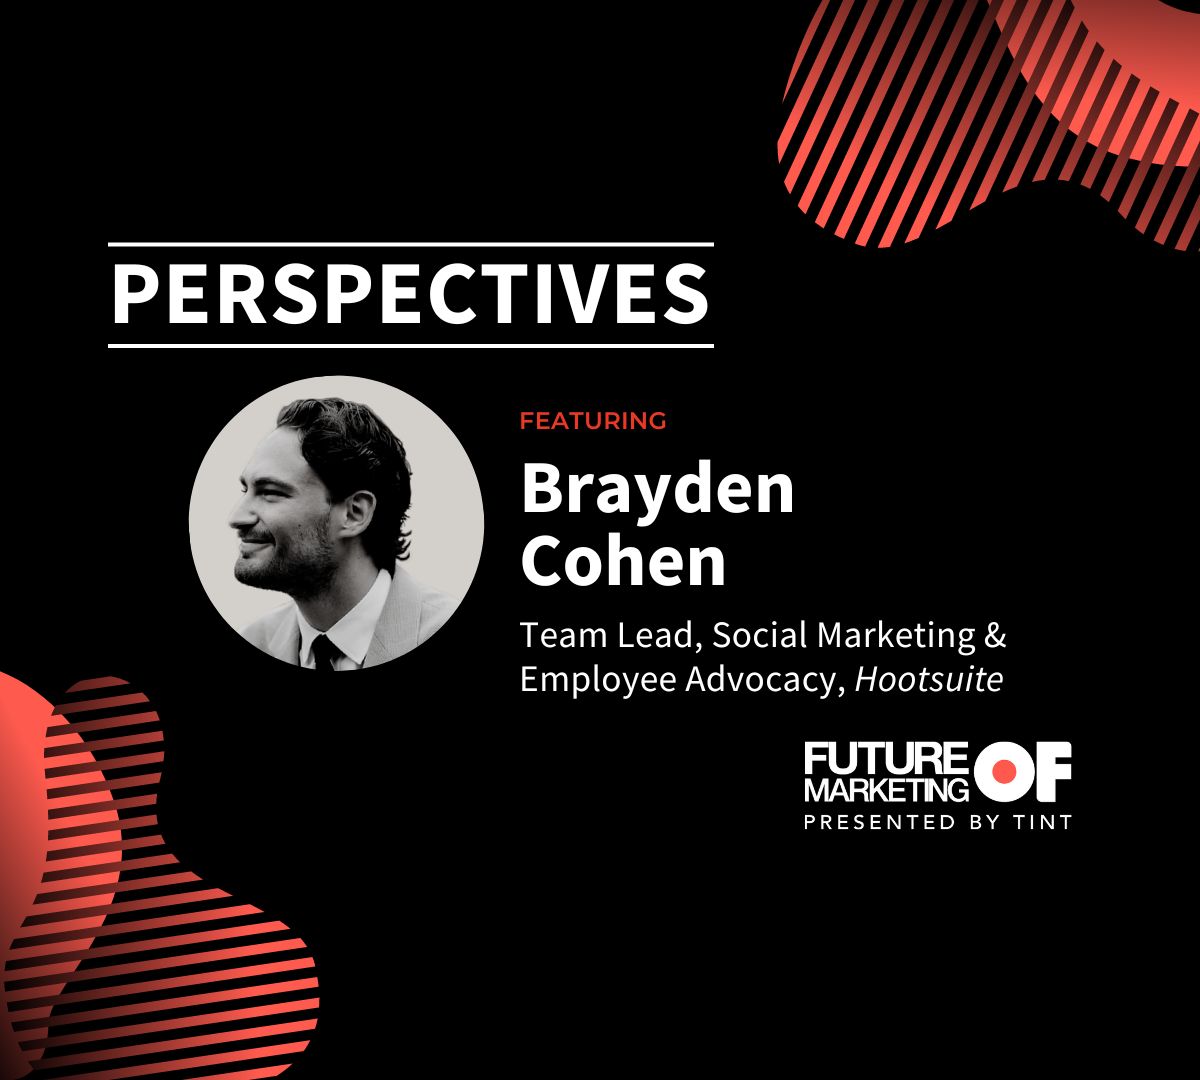 Brayden Cohen, Team Lead, Social Marketing & Employee Advocacy, Hootsuite